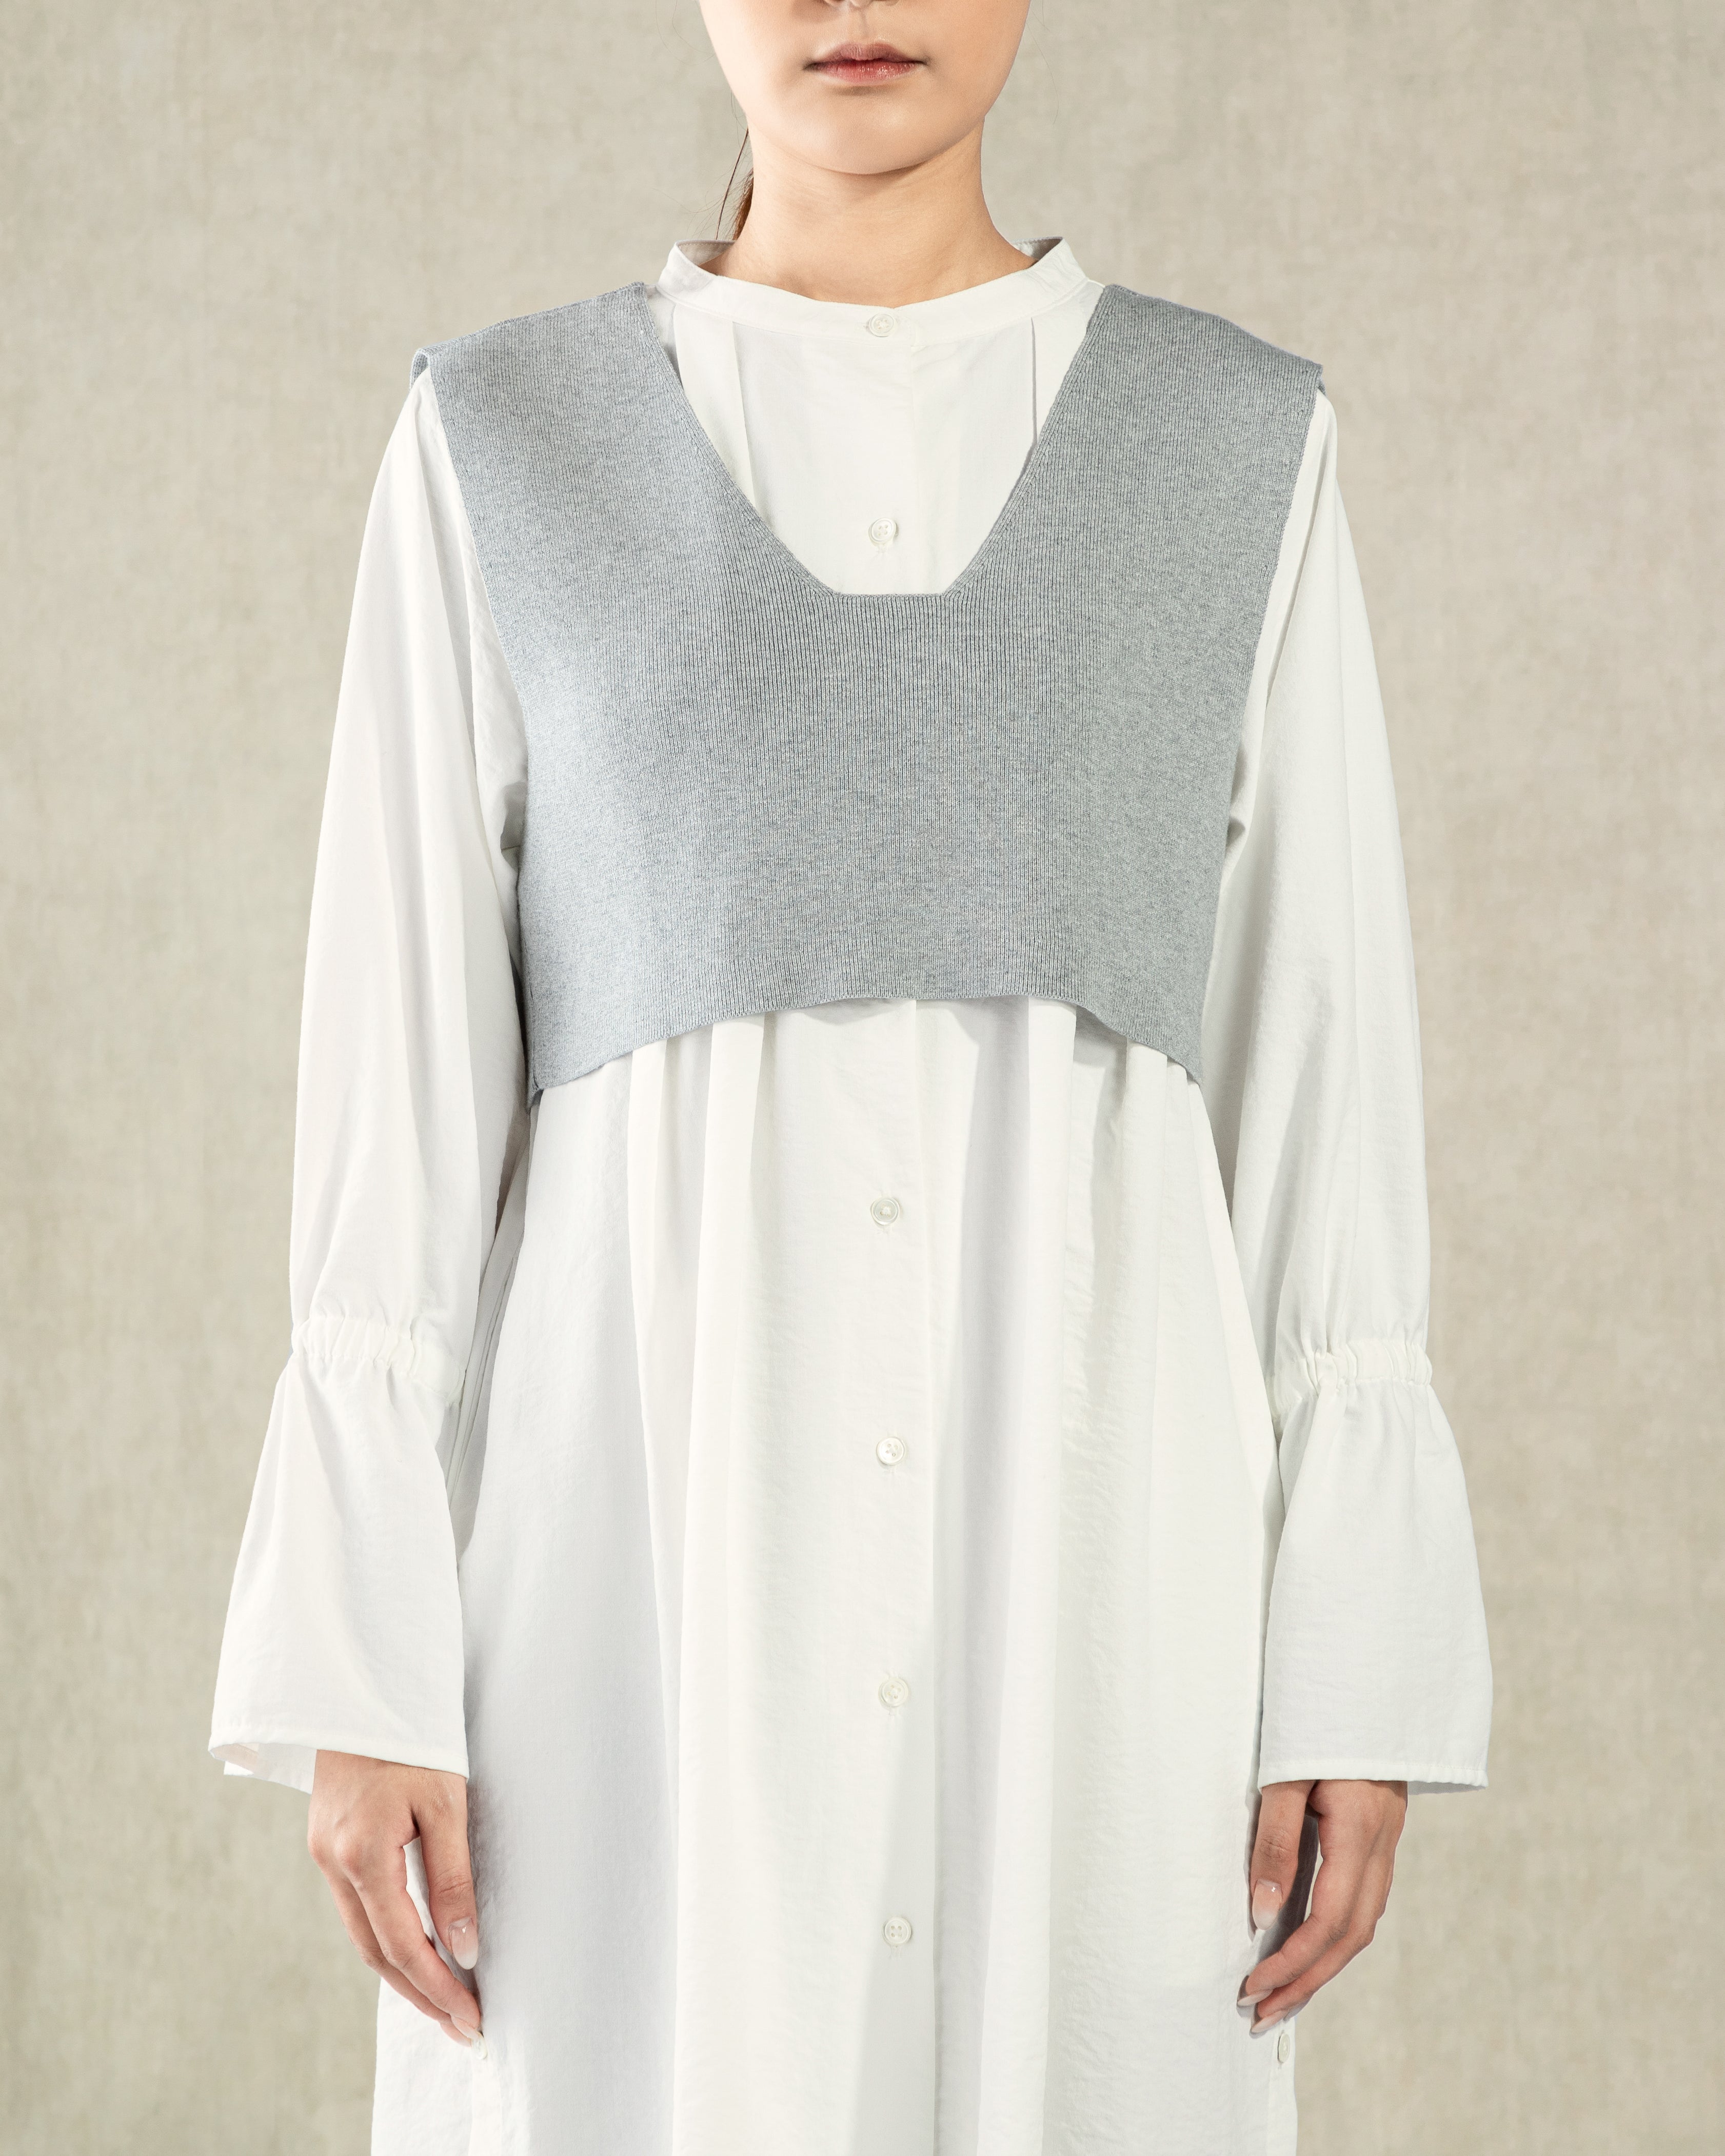 Flint Grey Heather Cropped Sweater Vest Womens Sleeveless